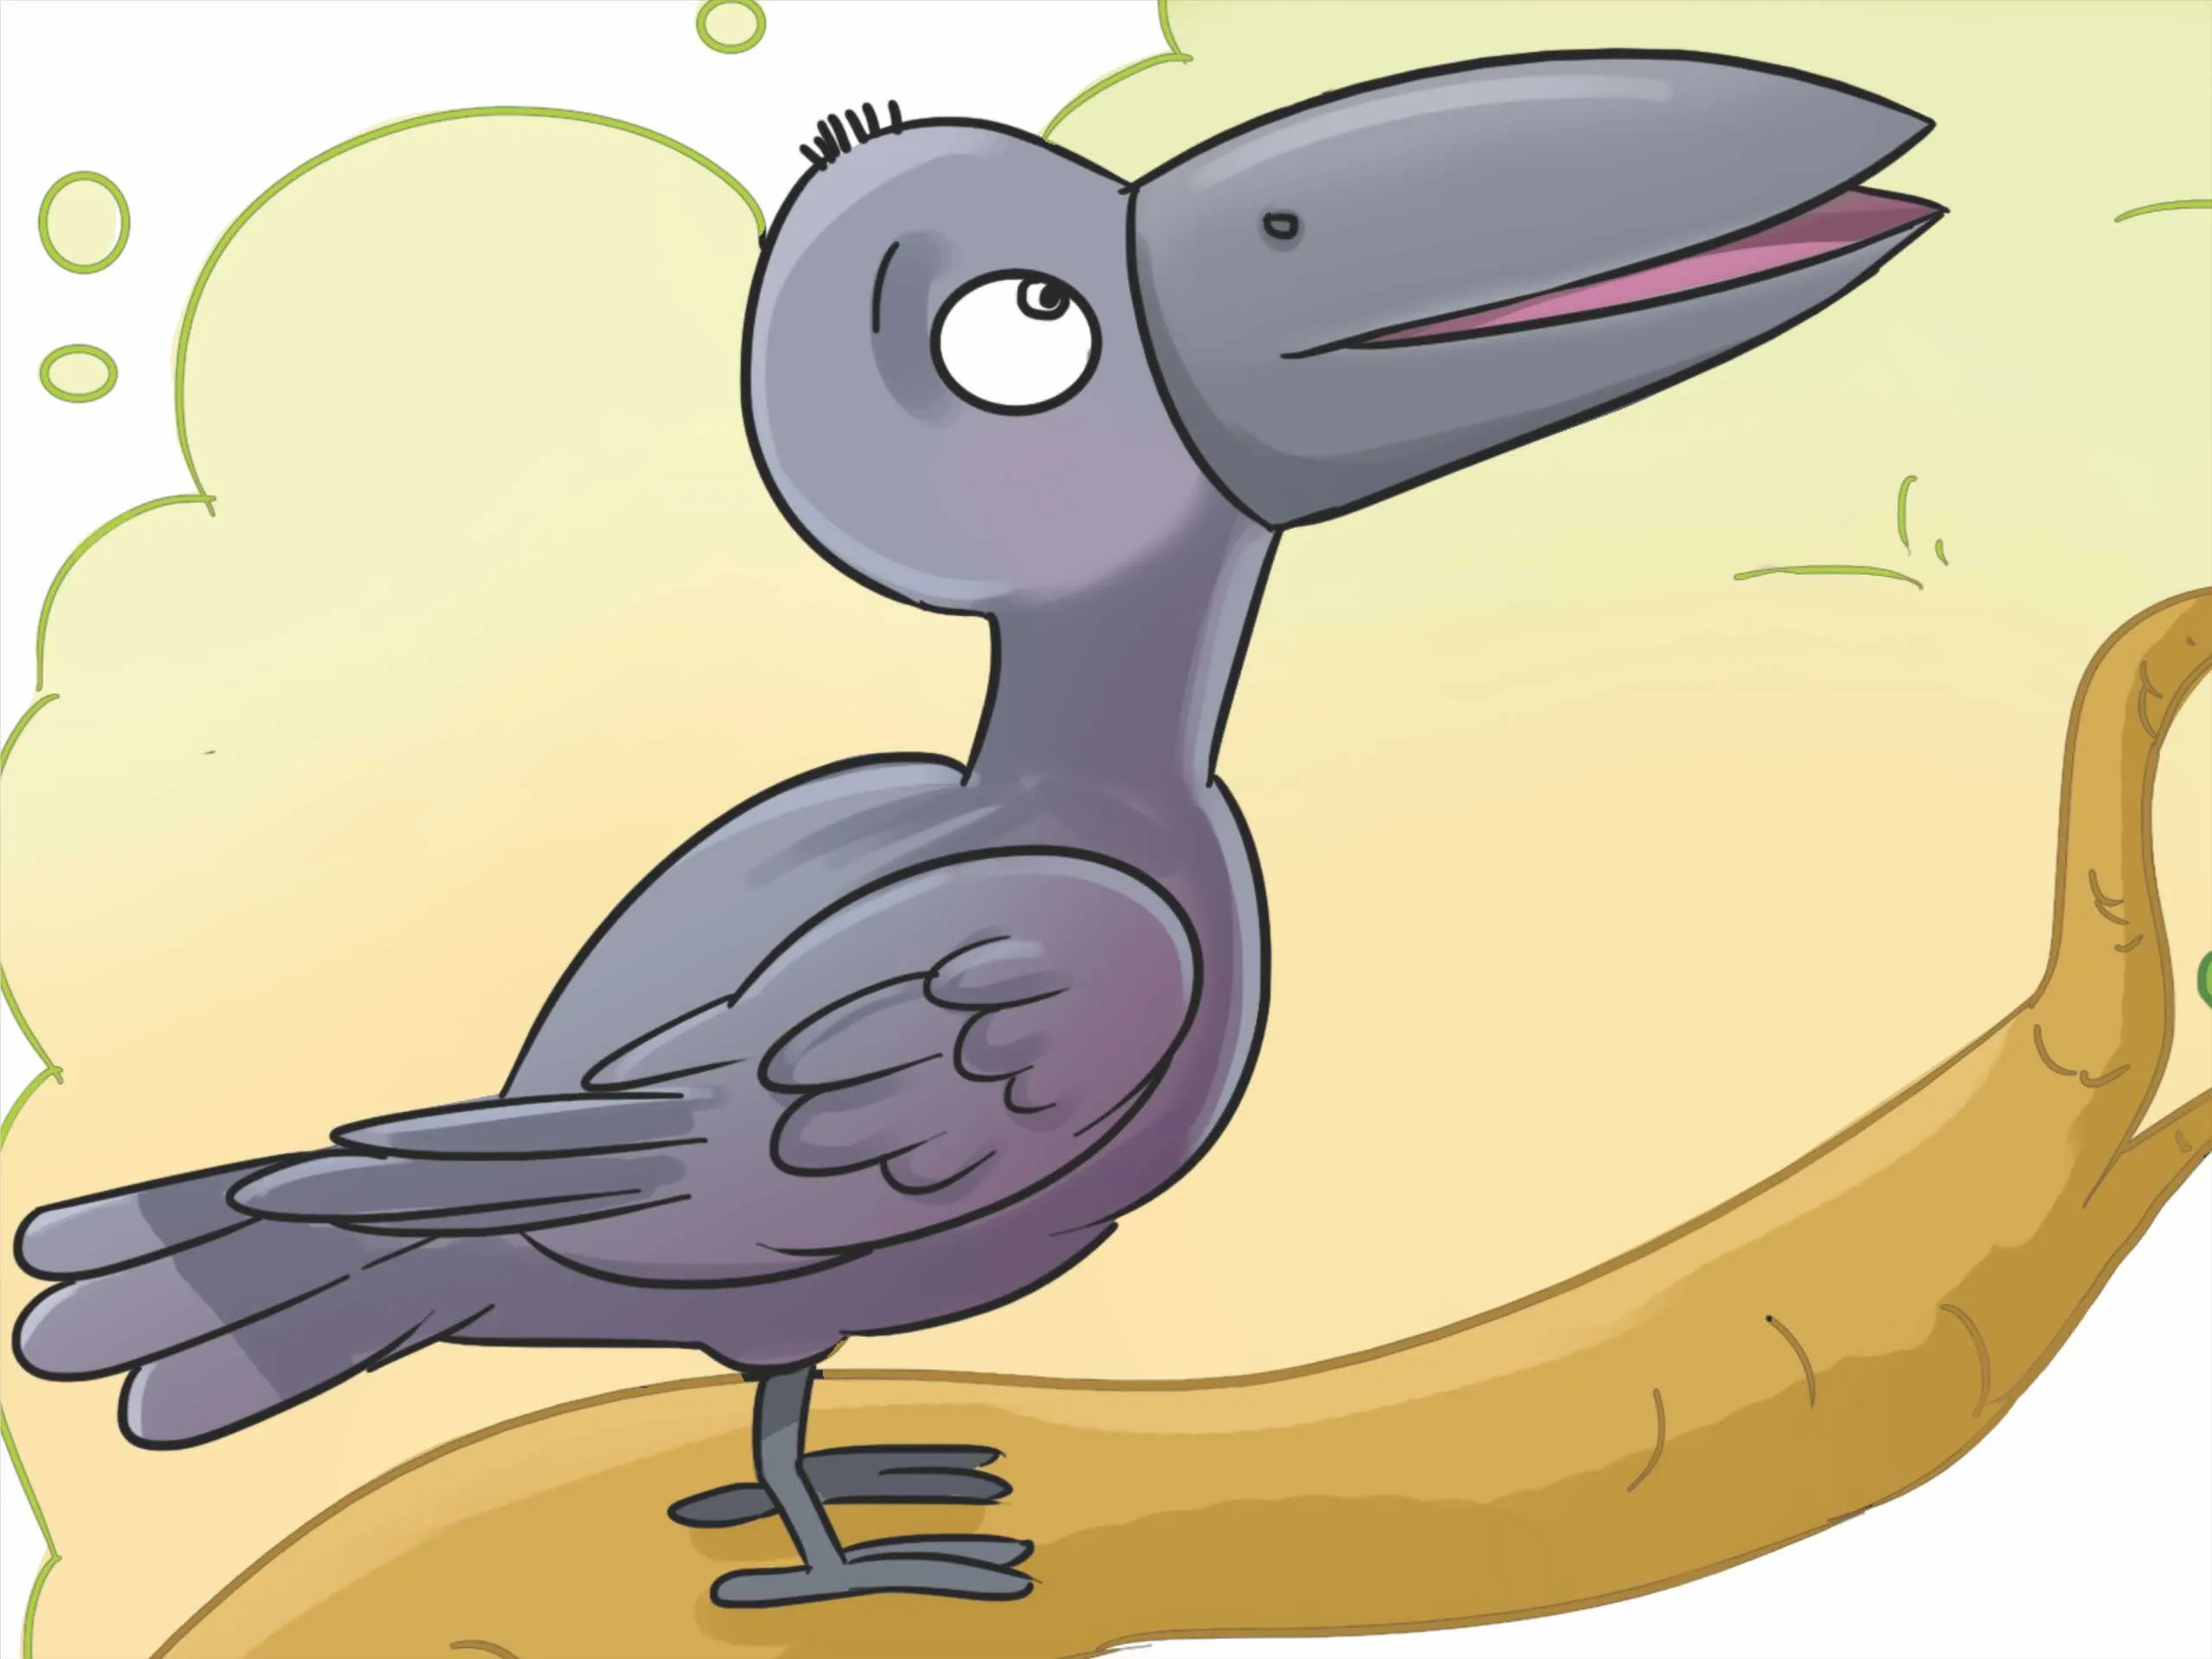 Crow cartoon image